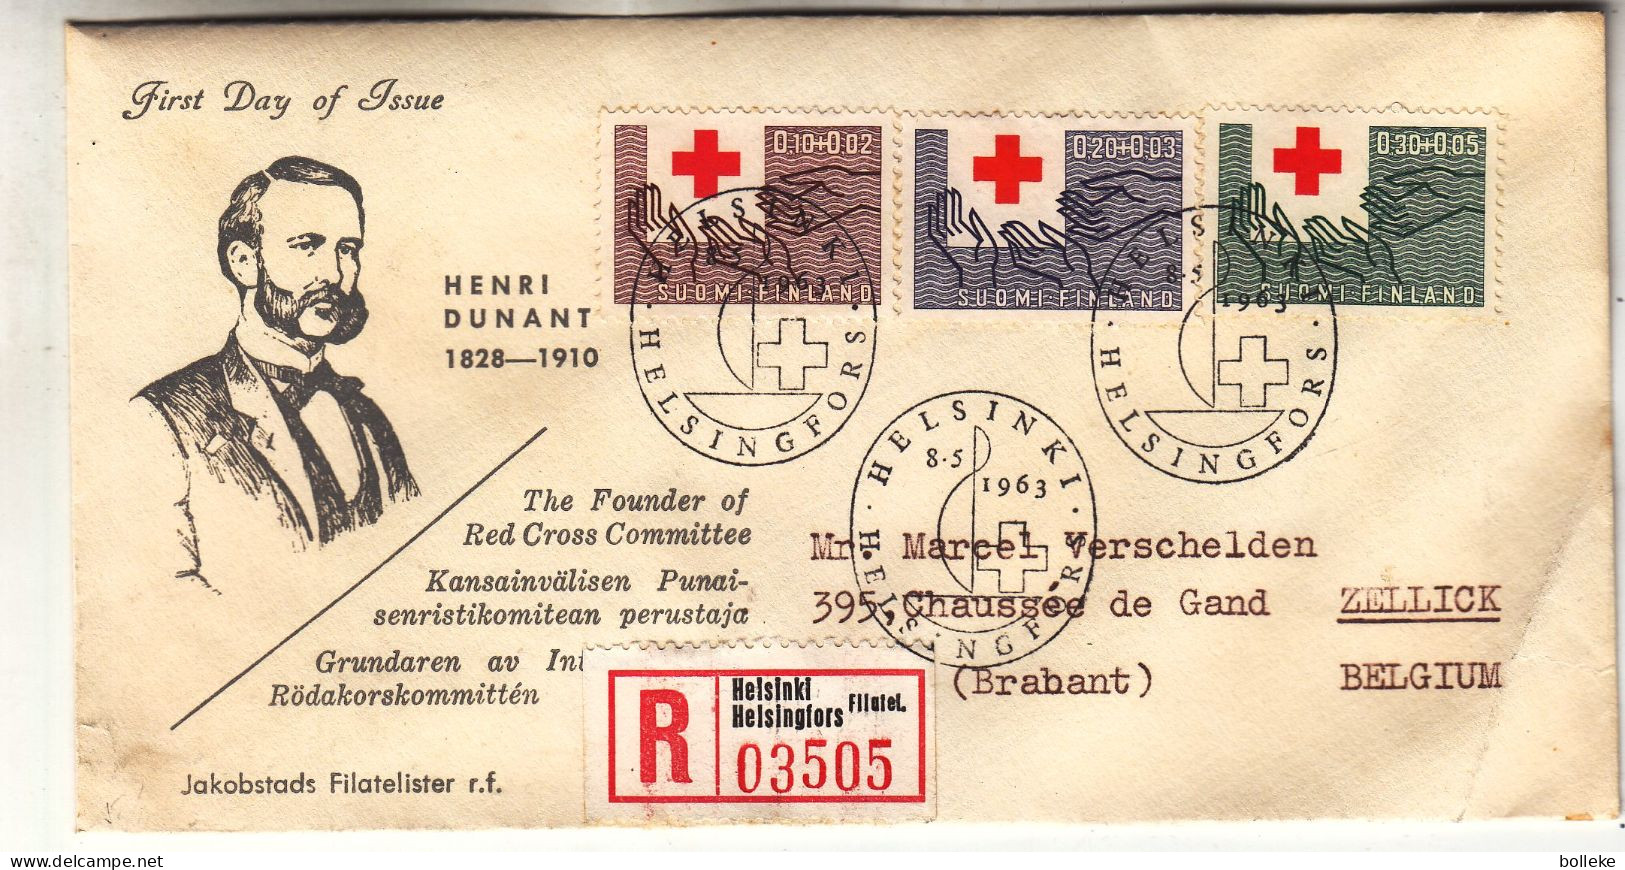 Croix Rouge - Finlande - Lettre Recom De 1963 - Oblit Helsinki - - Brieven En Documenten